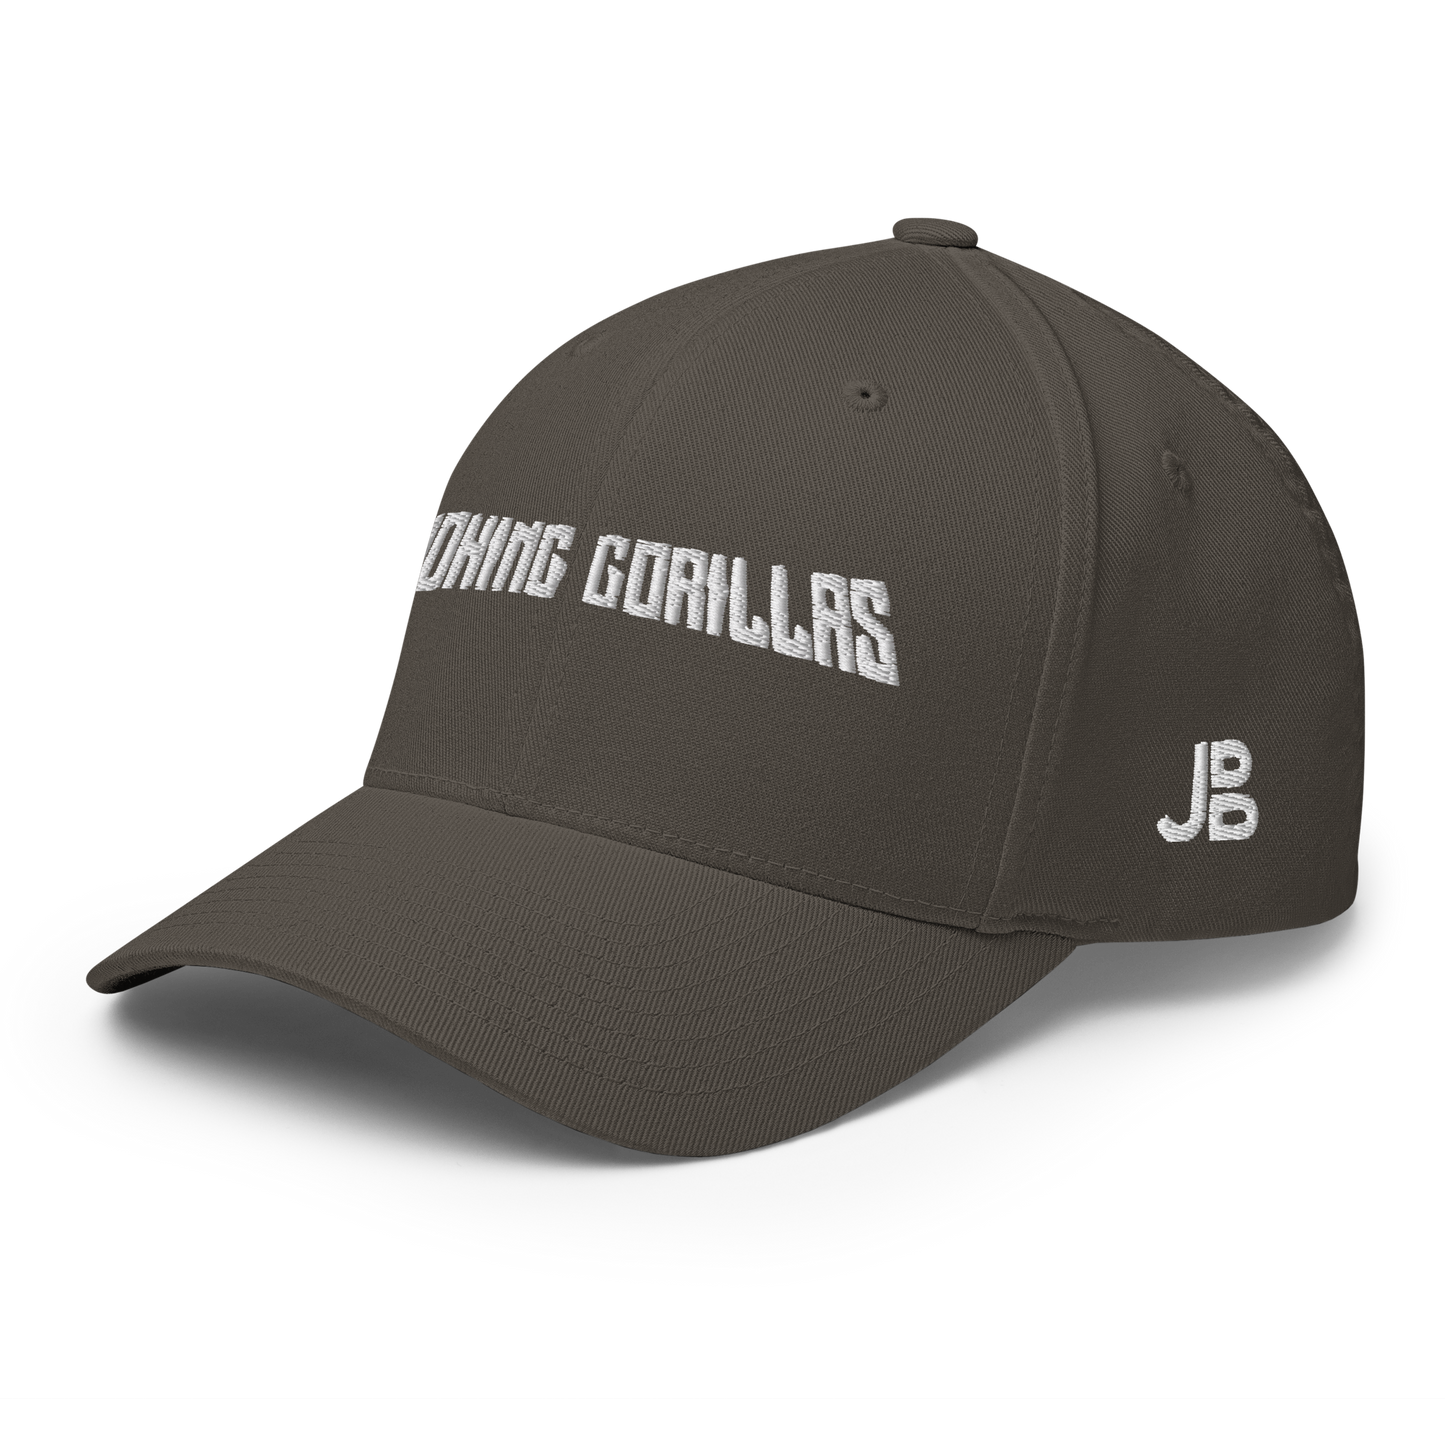 SMOKING GORILLAS - Flexfit Cap